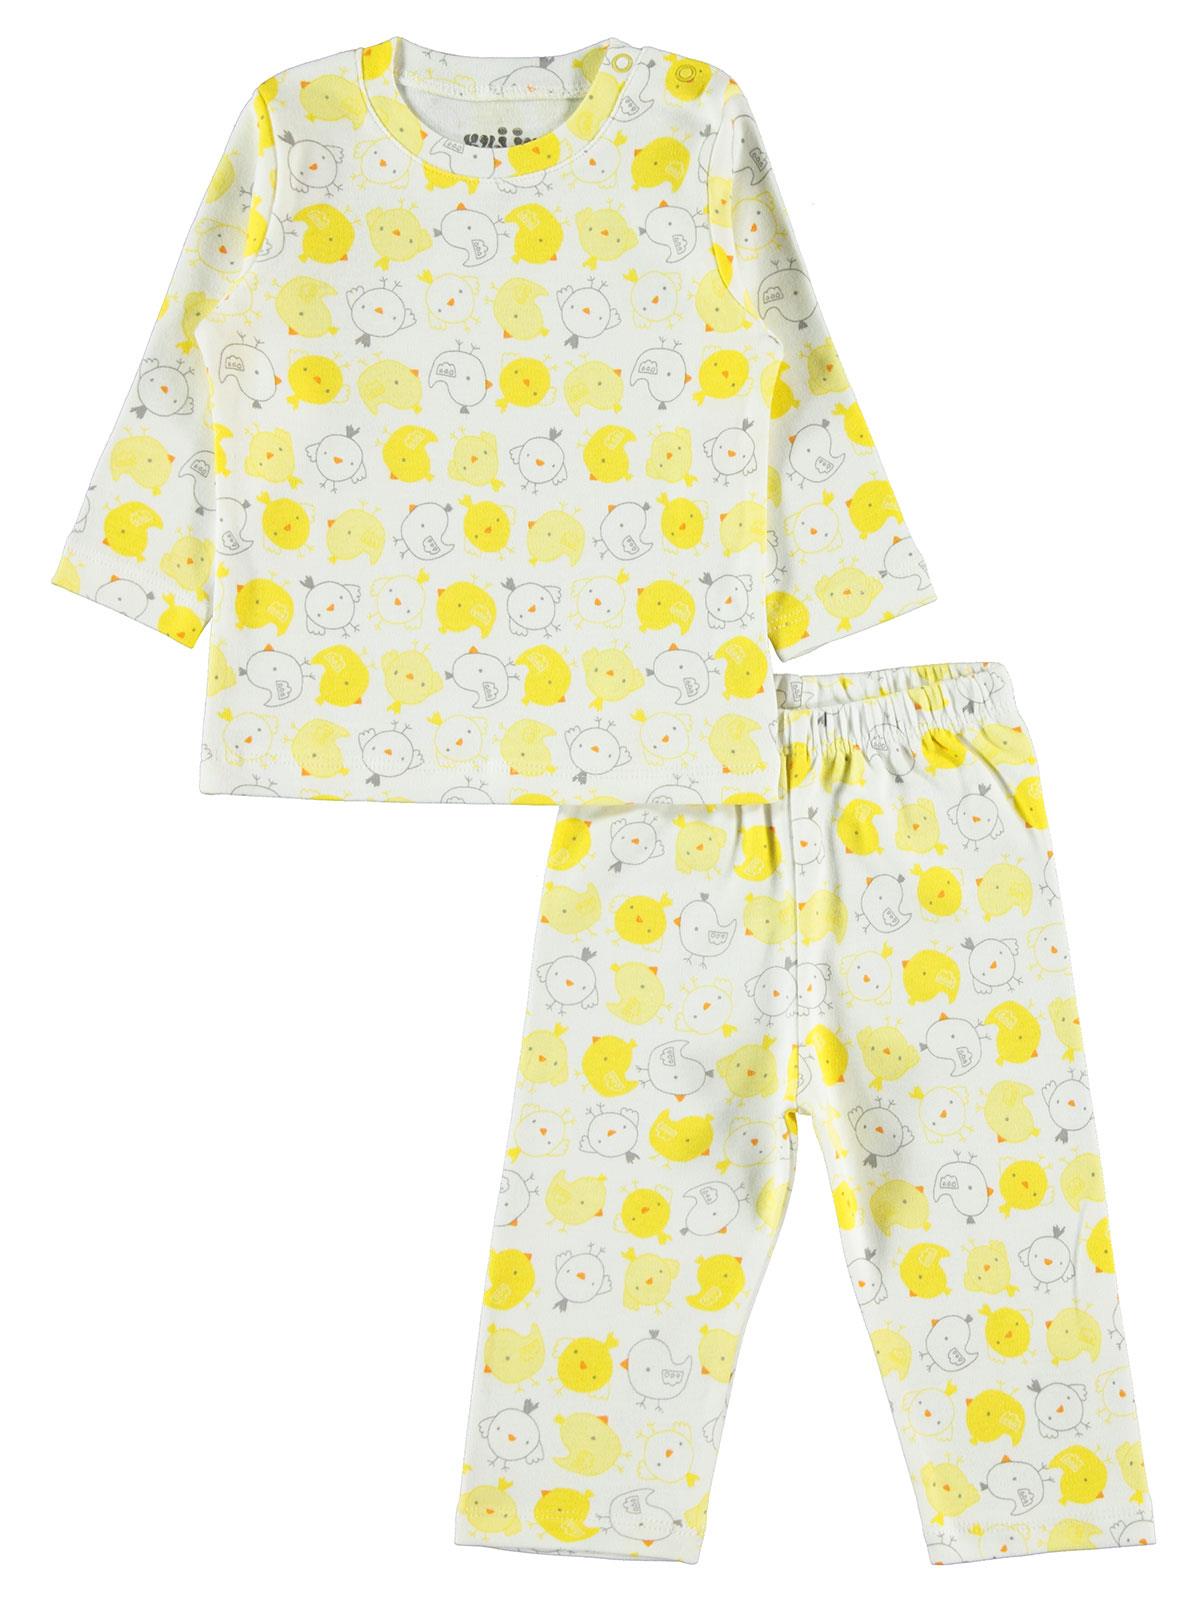 Kujju Bebek Pijama Takımı 6-18 Ay Sarı